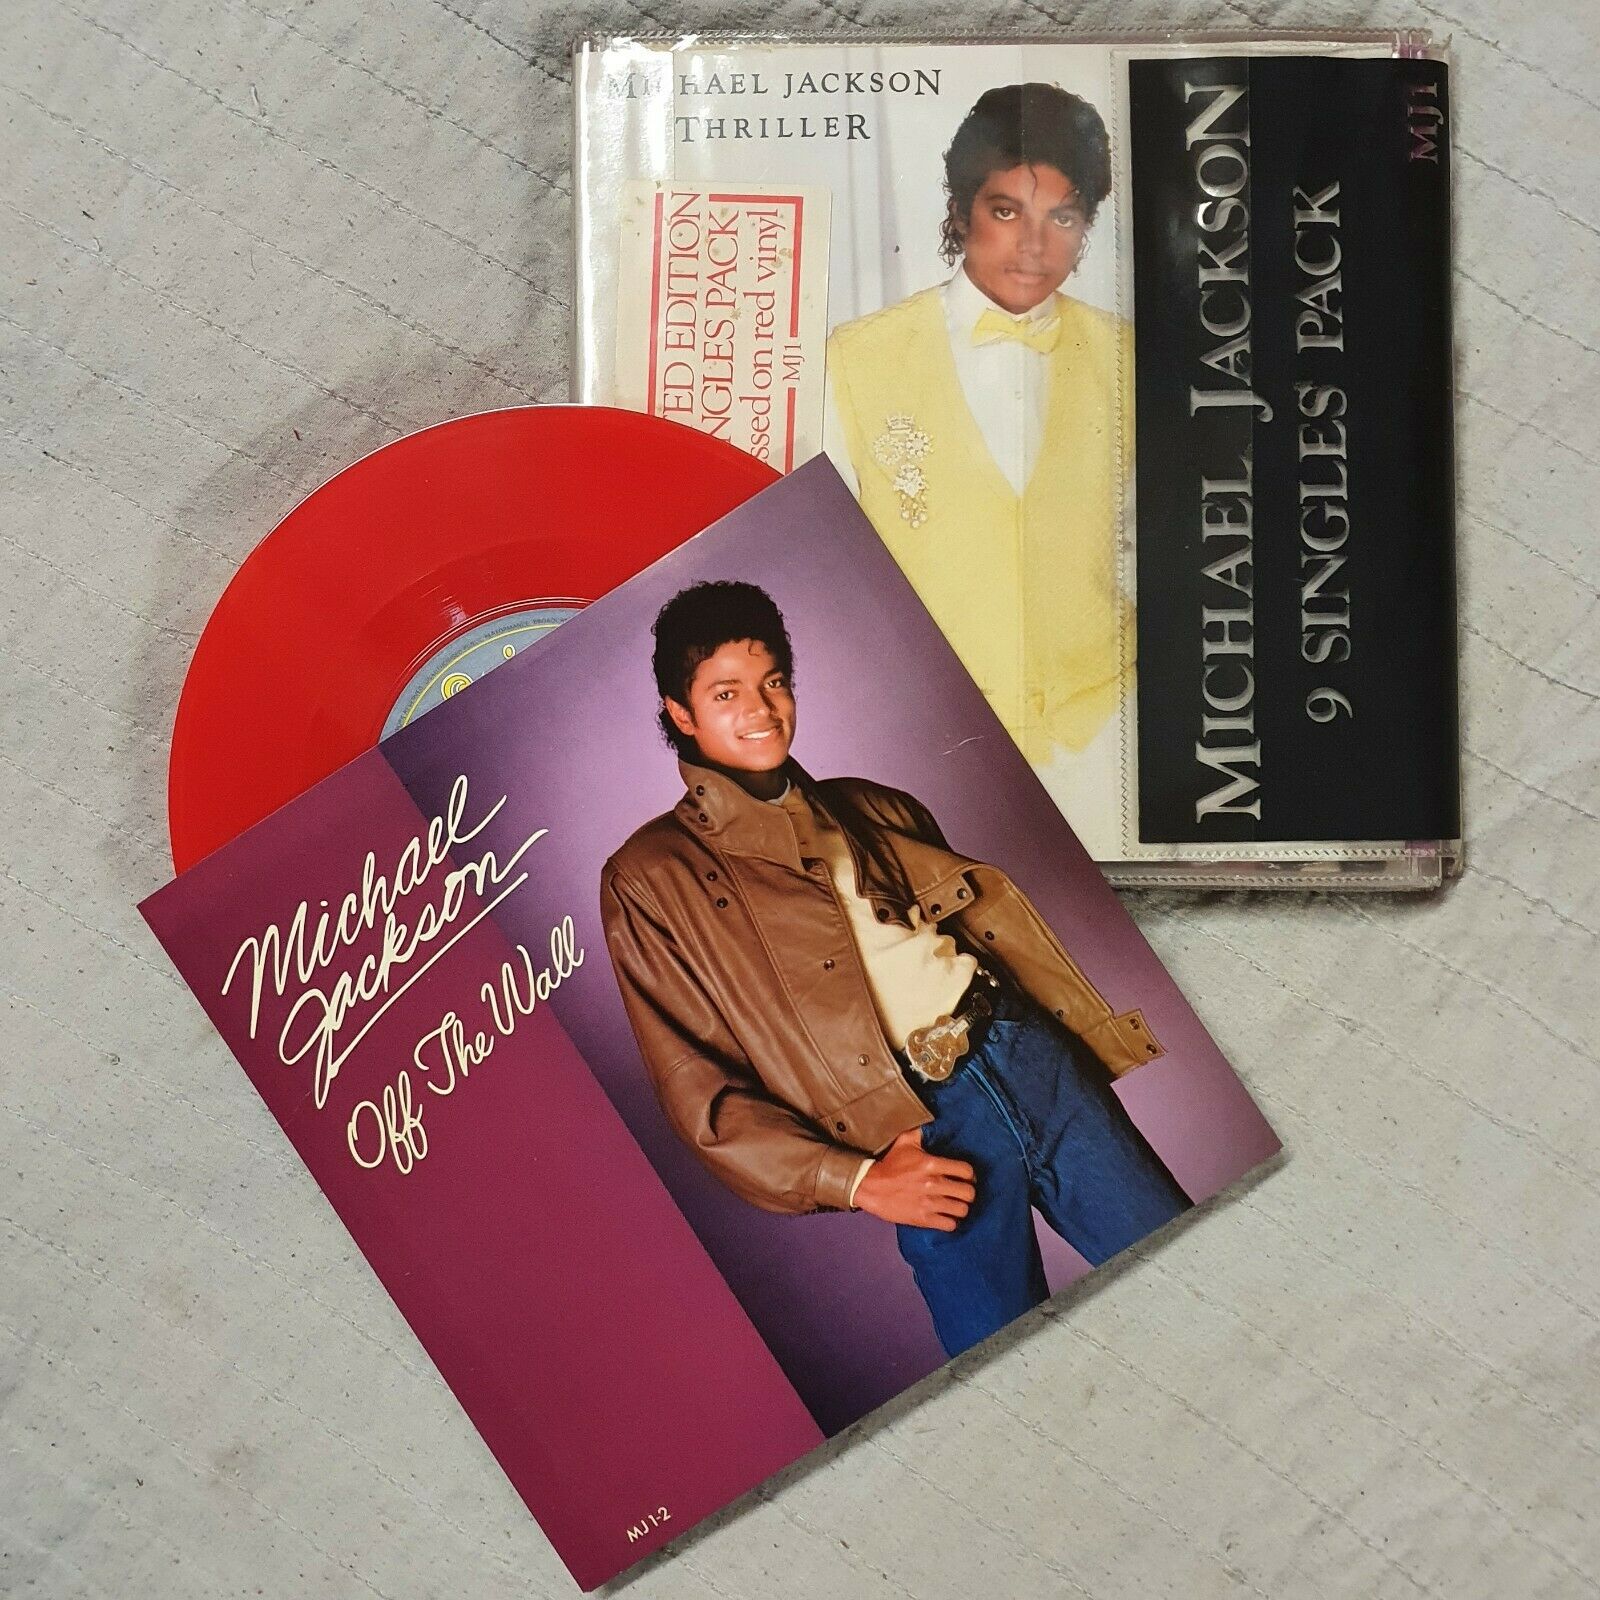 popsike.com - Michael Jackson 9 Singles Pack Red Vinyl 7 inch Mint